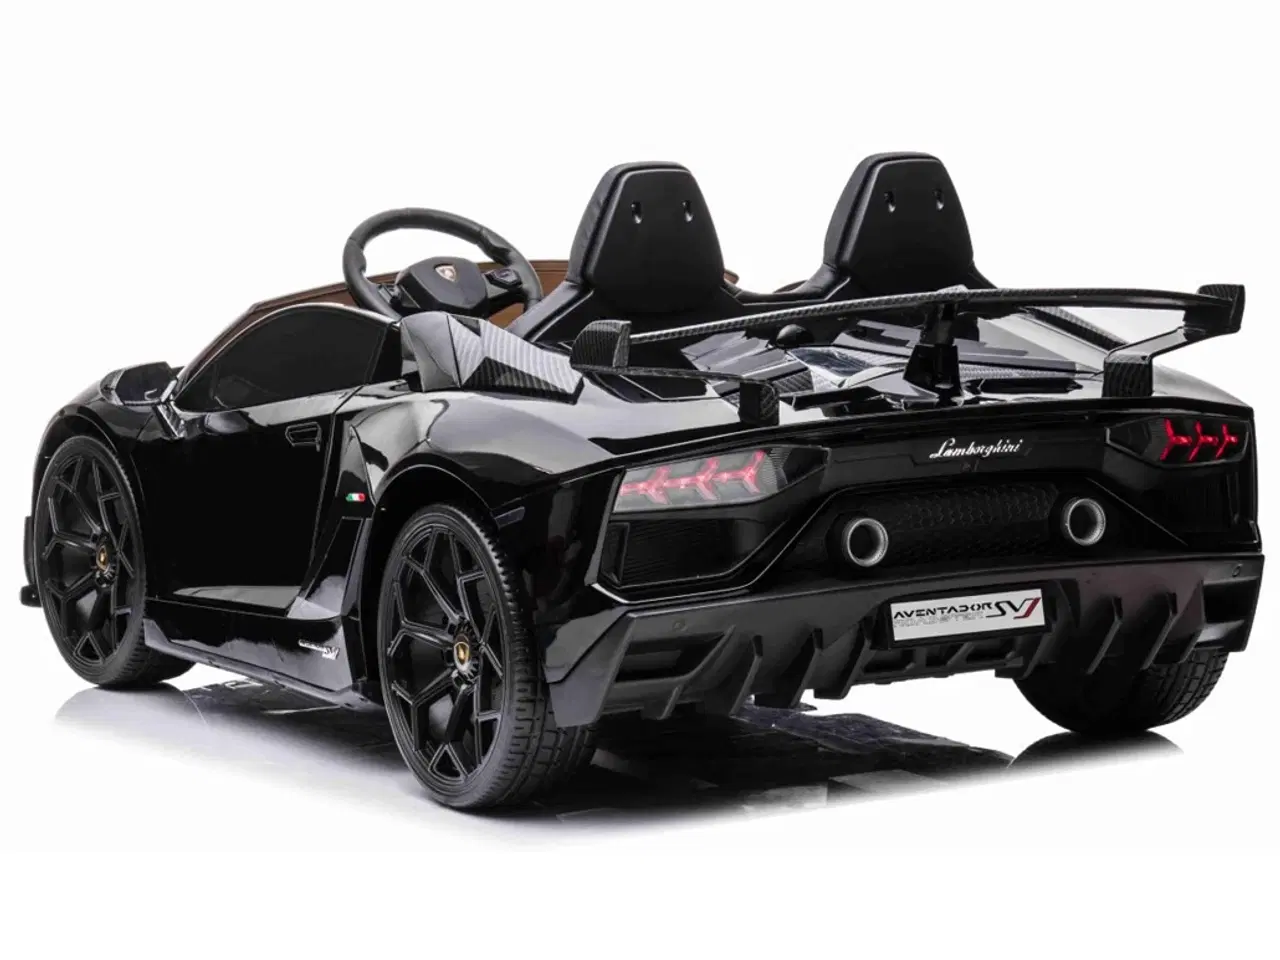 Billede 2 - Ny Lamborghini Aventador elbil til børn